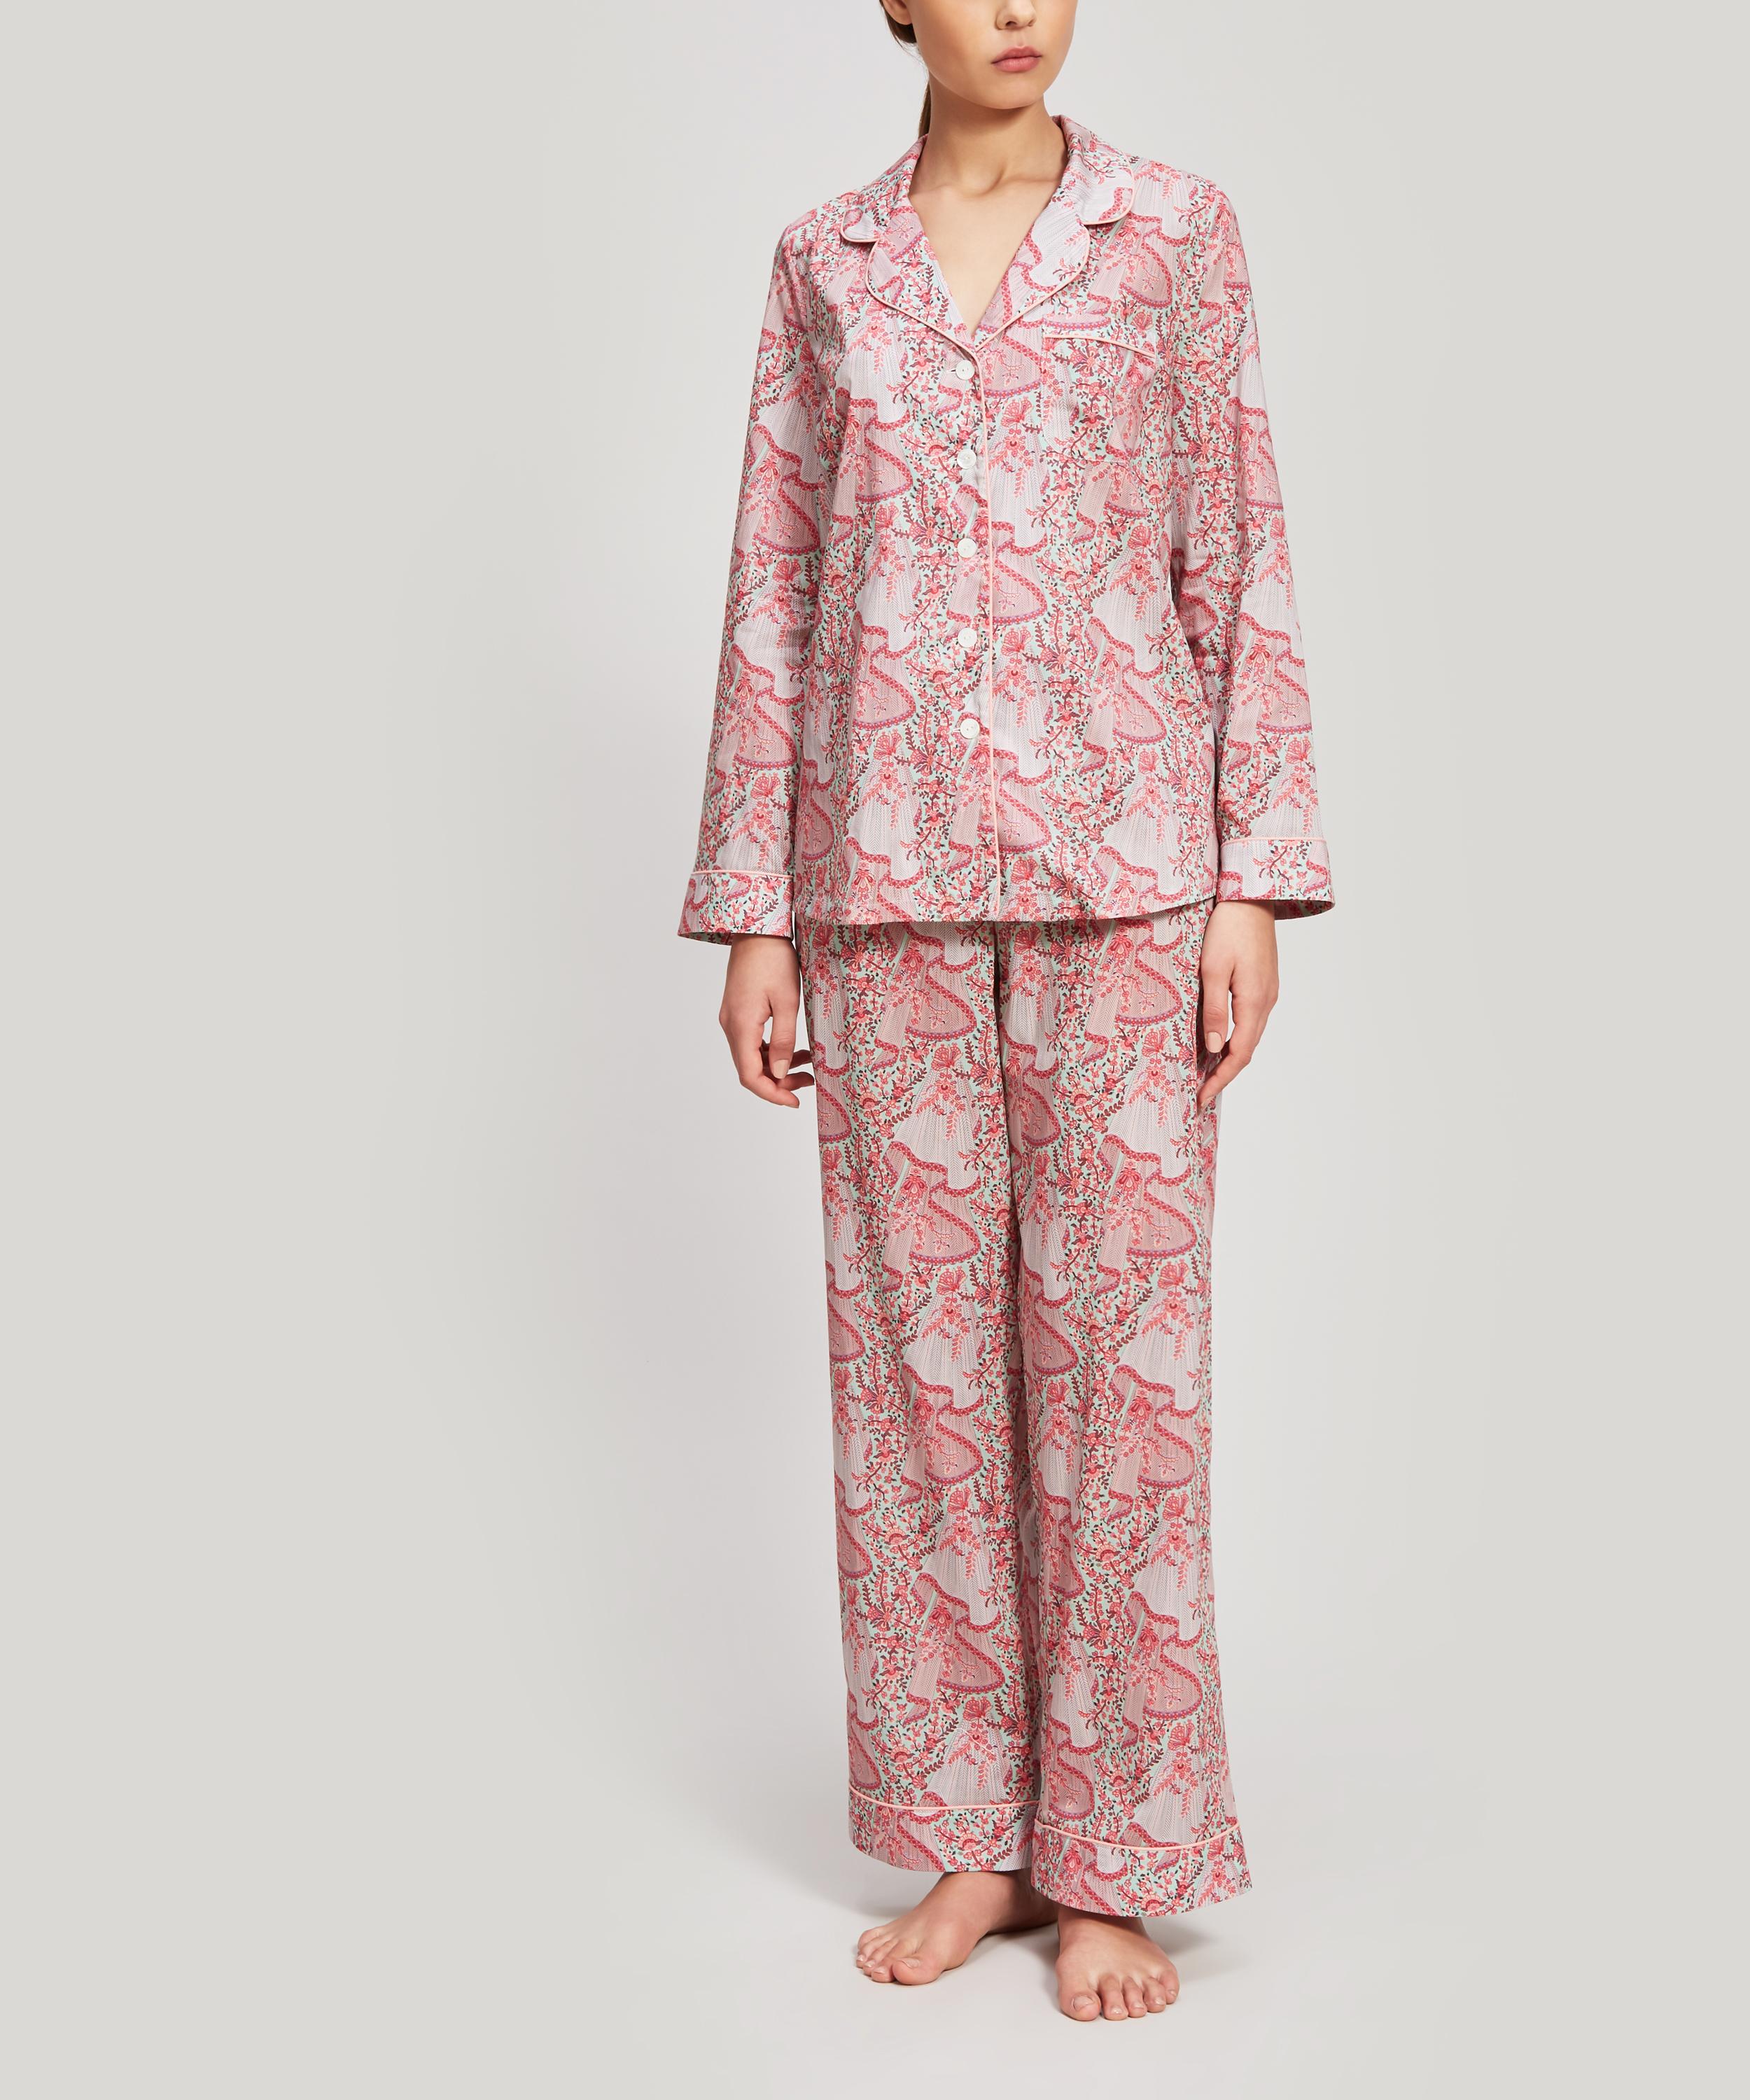 Liberty London Dora Tana Lawn' Cotton Pyjama Set In Pink